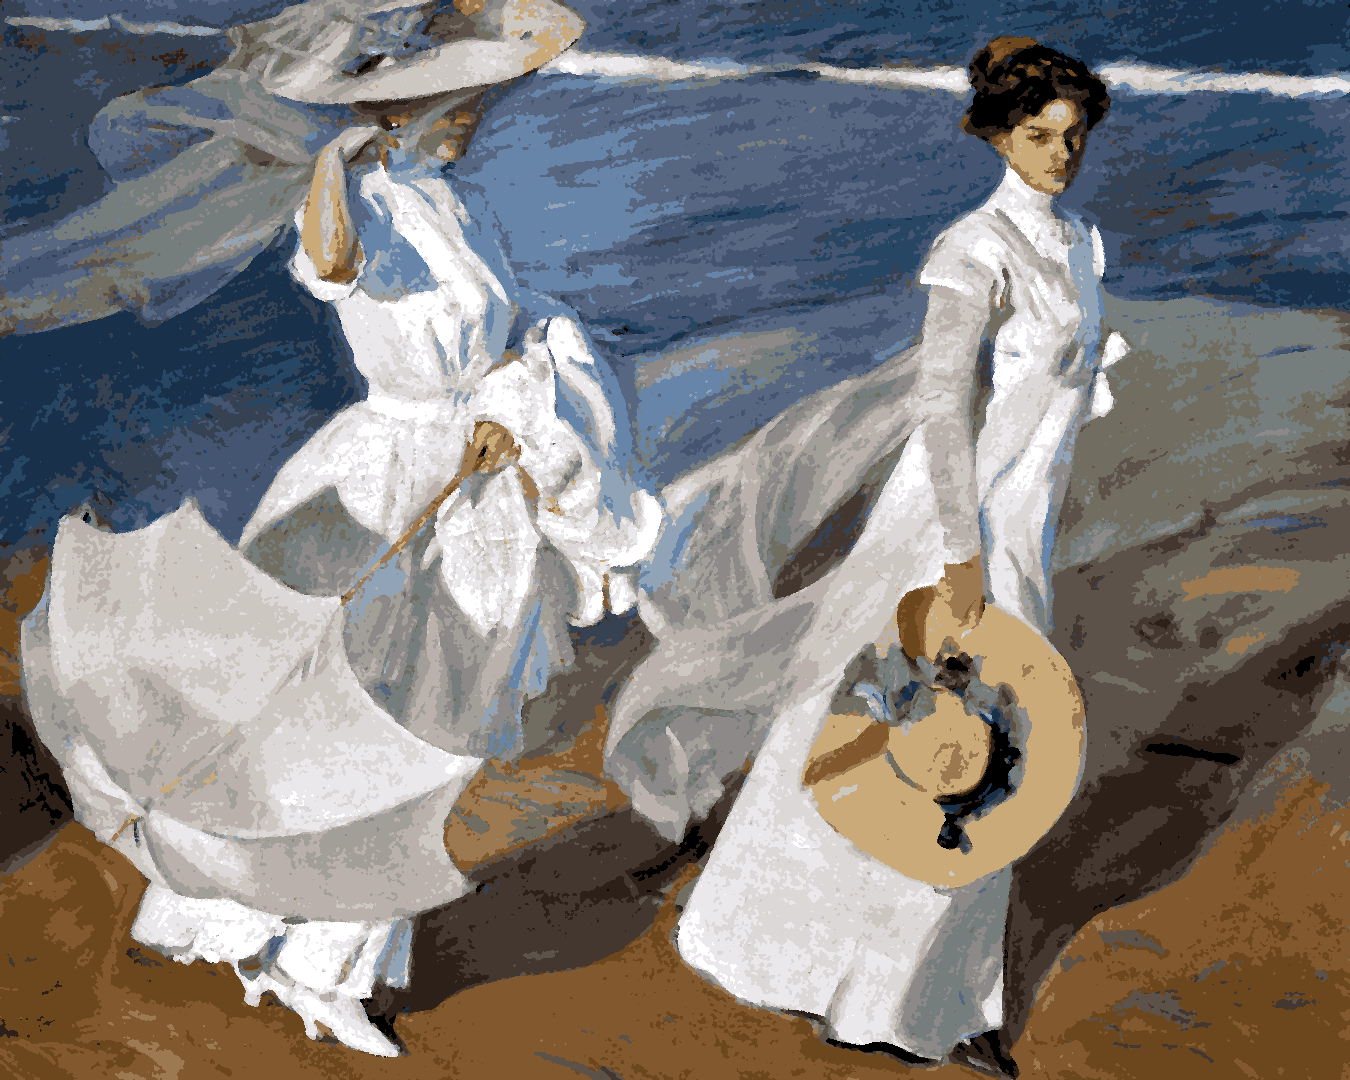 Strolling along the Seashore by Joaquin Sorolla y Bastida - Van-Go Paint-By-Number Kit